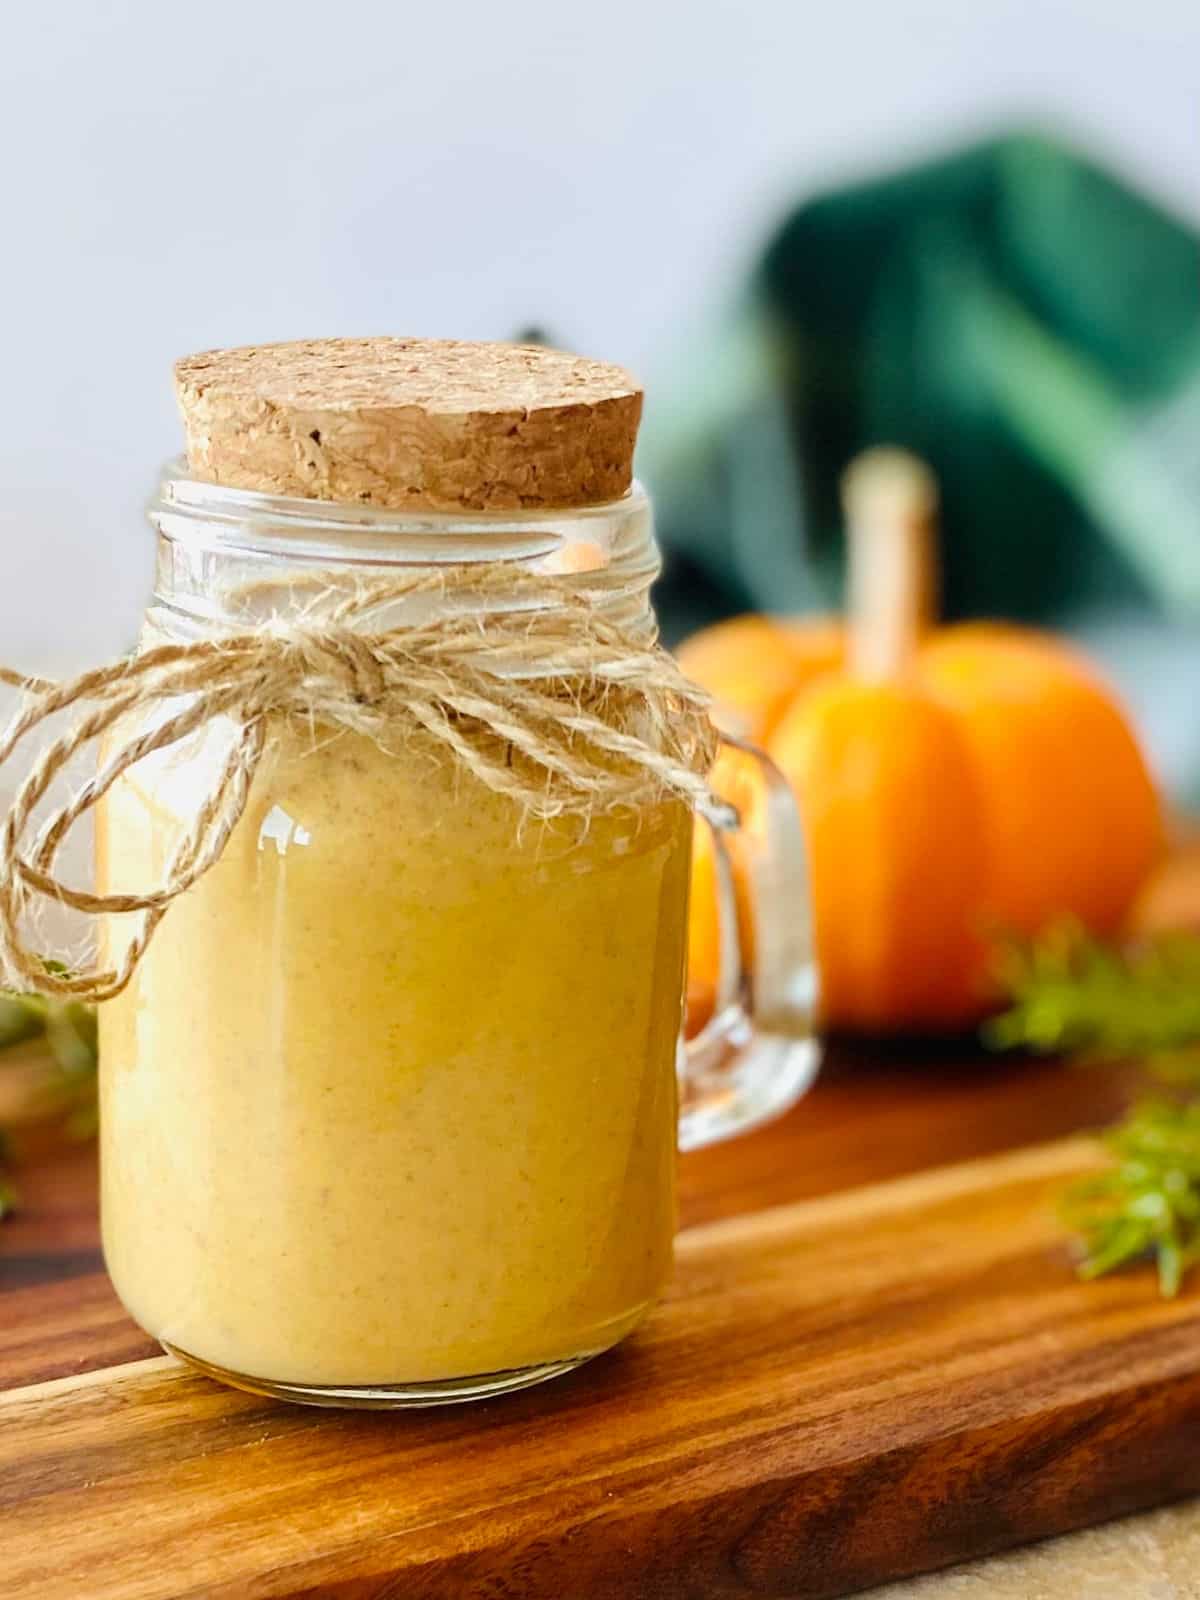 copycat starbucks pumpkin sauce in a jar with a pumpkin in the background.